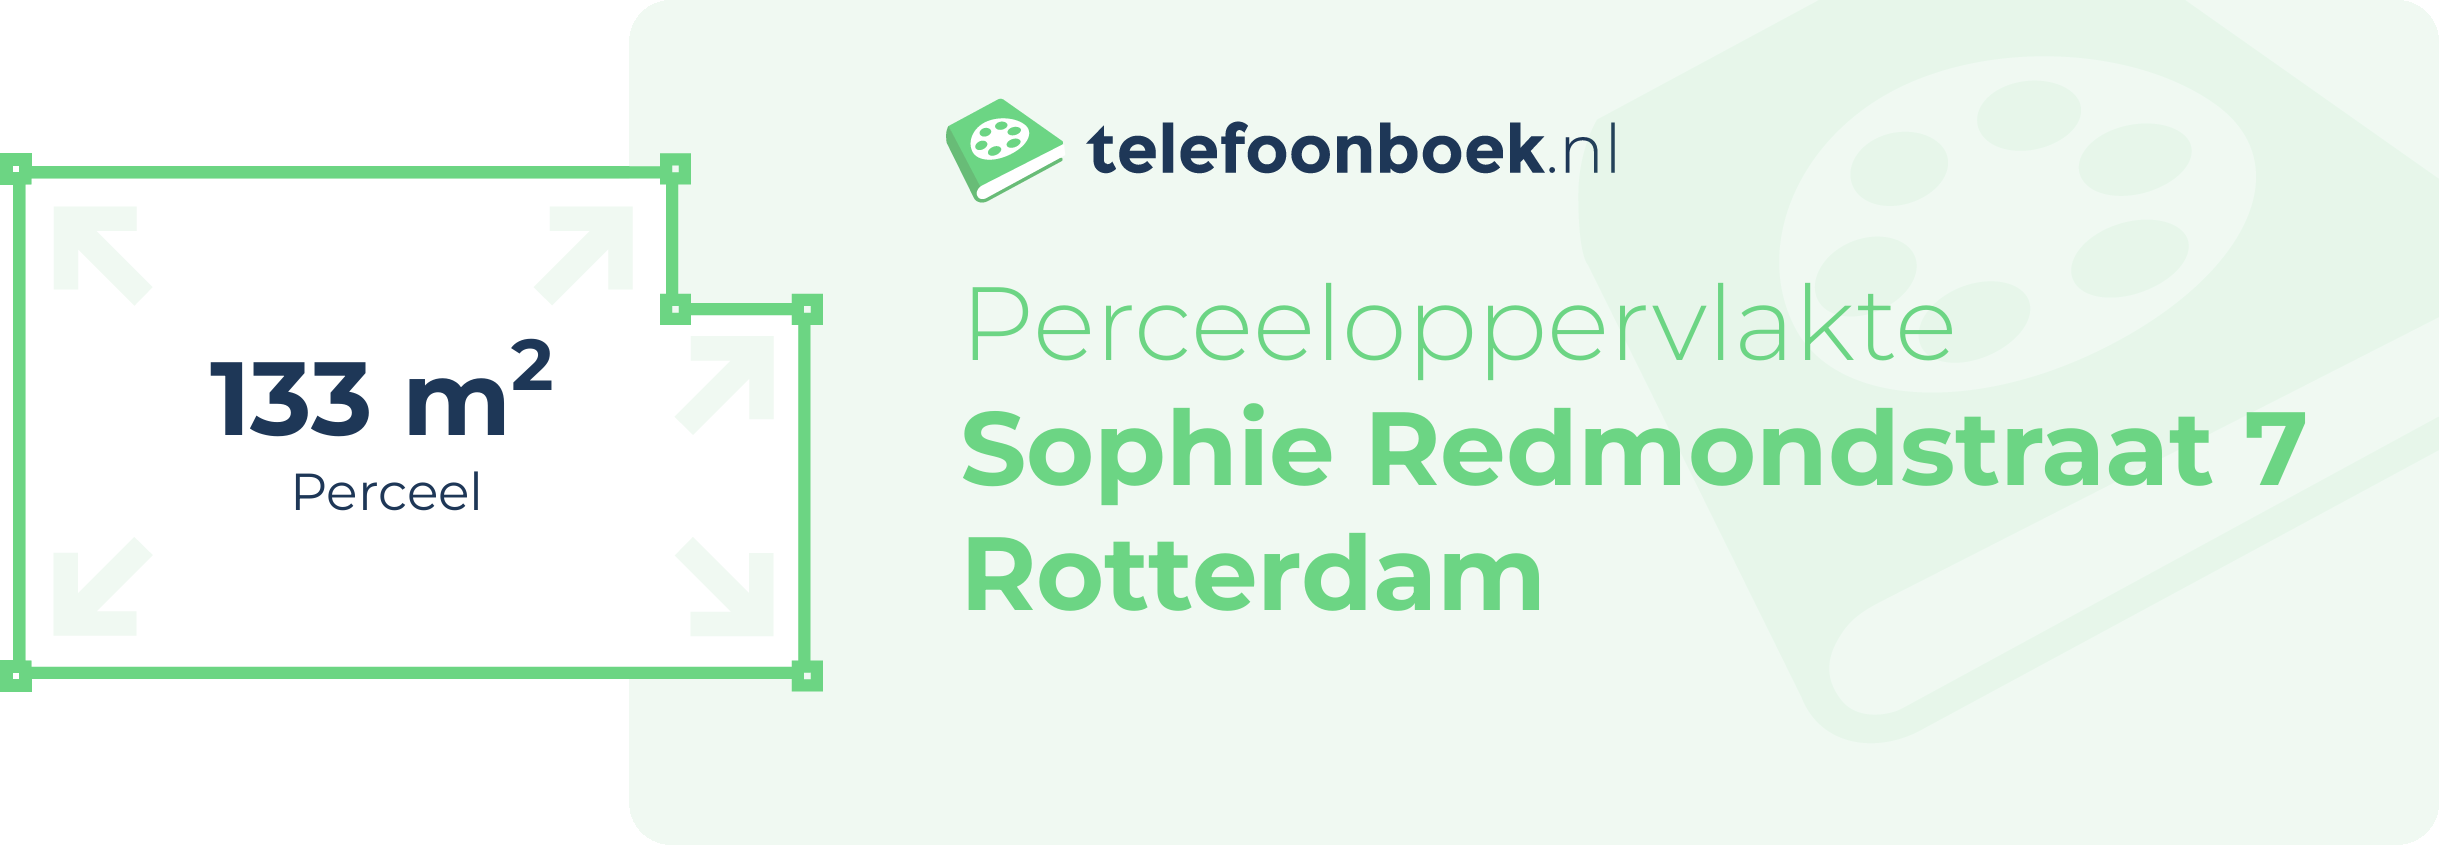 Perceeloppervlakte Sophie Redmondstraat 7 Rotterdam